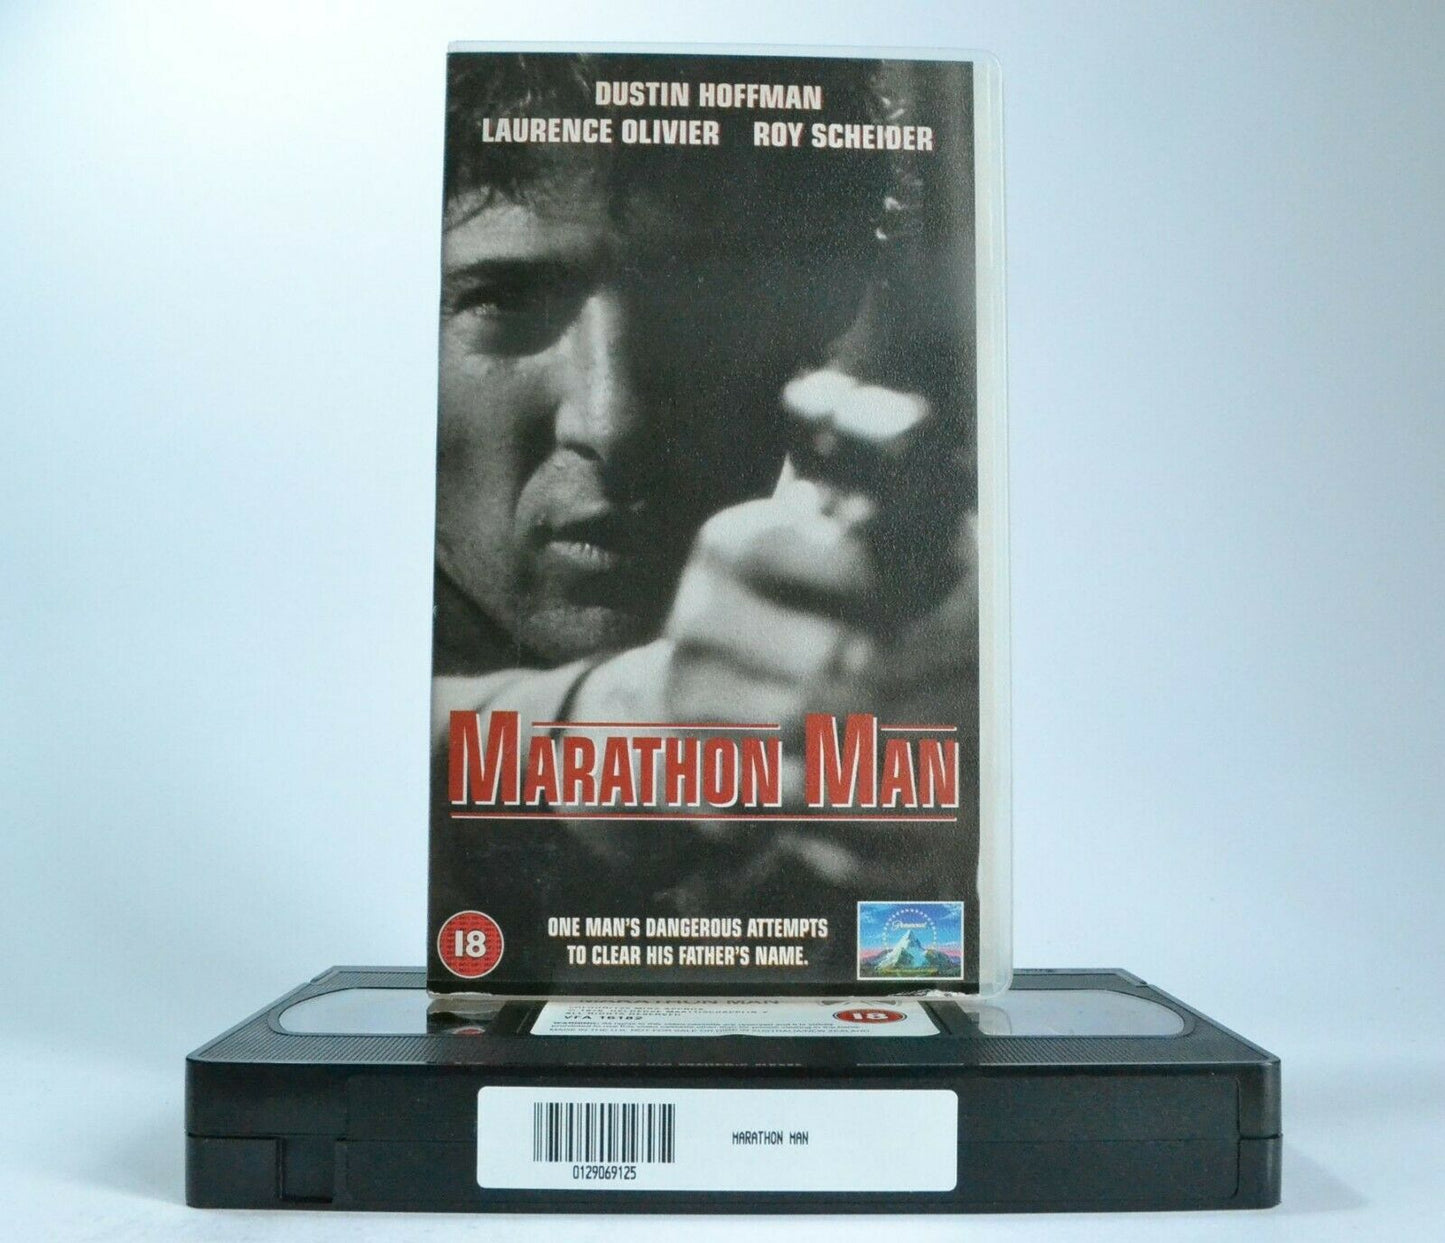 Marathon Man: Based On W.Goldman Novel - Suspense Thriller - D.Hoffman - Pal VHS-